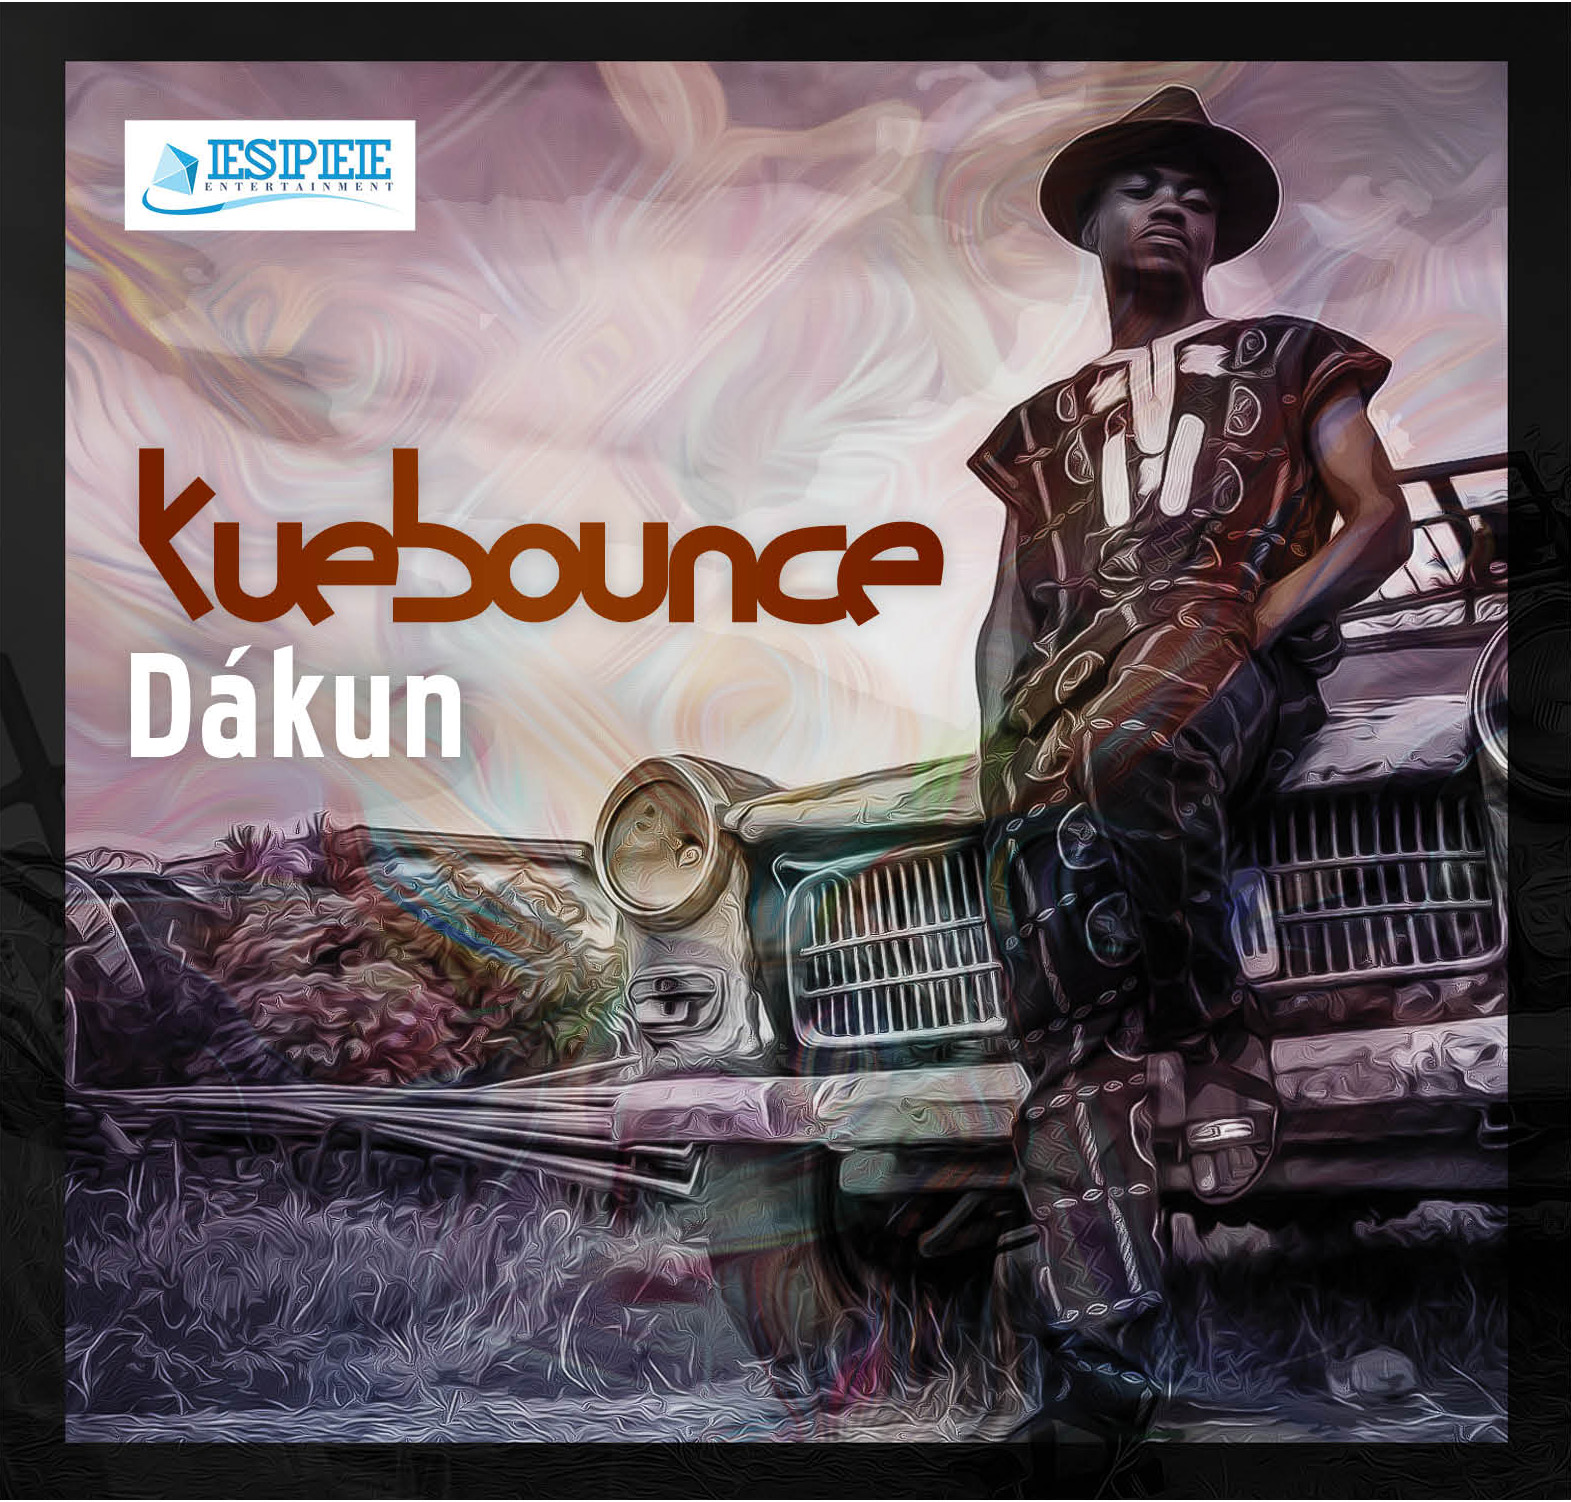 VIDEO: Kuebounce – Dakun